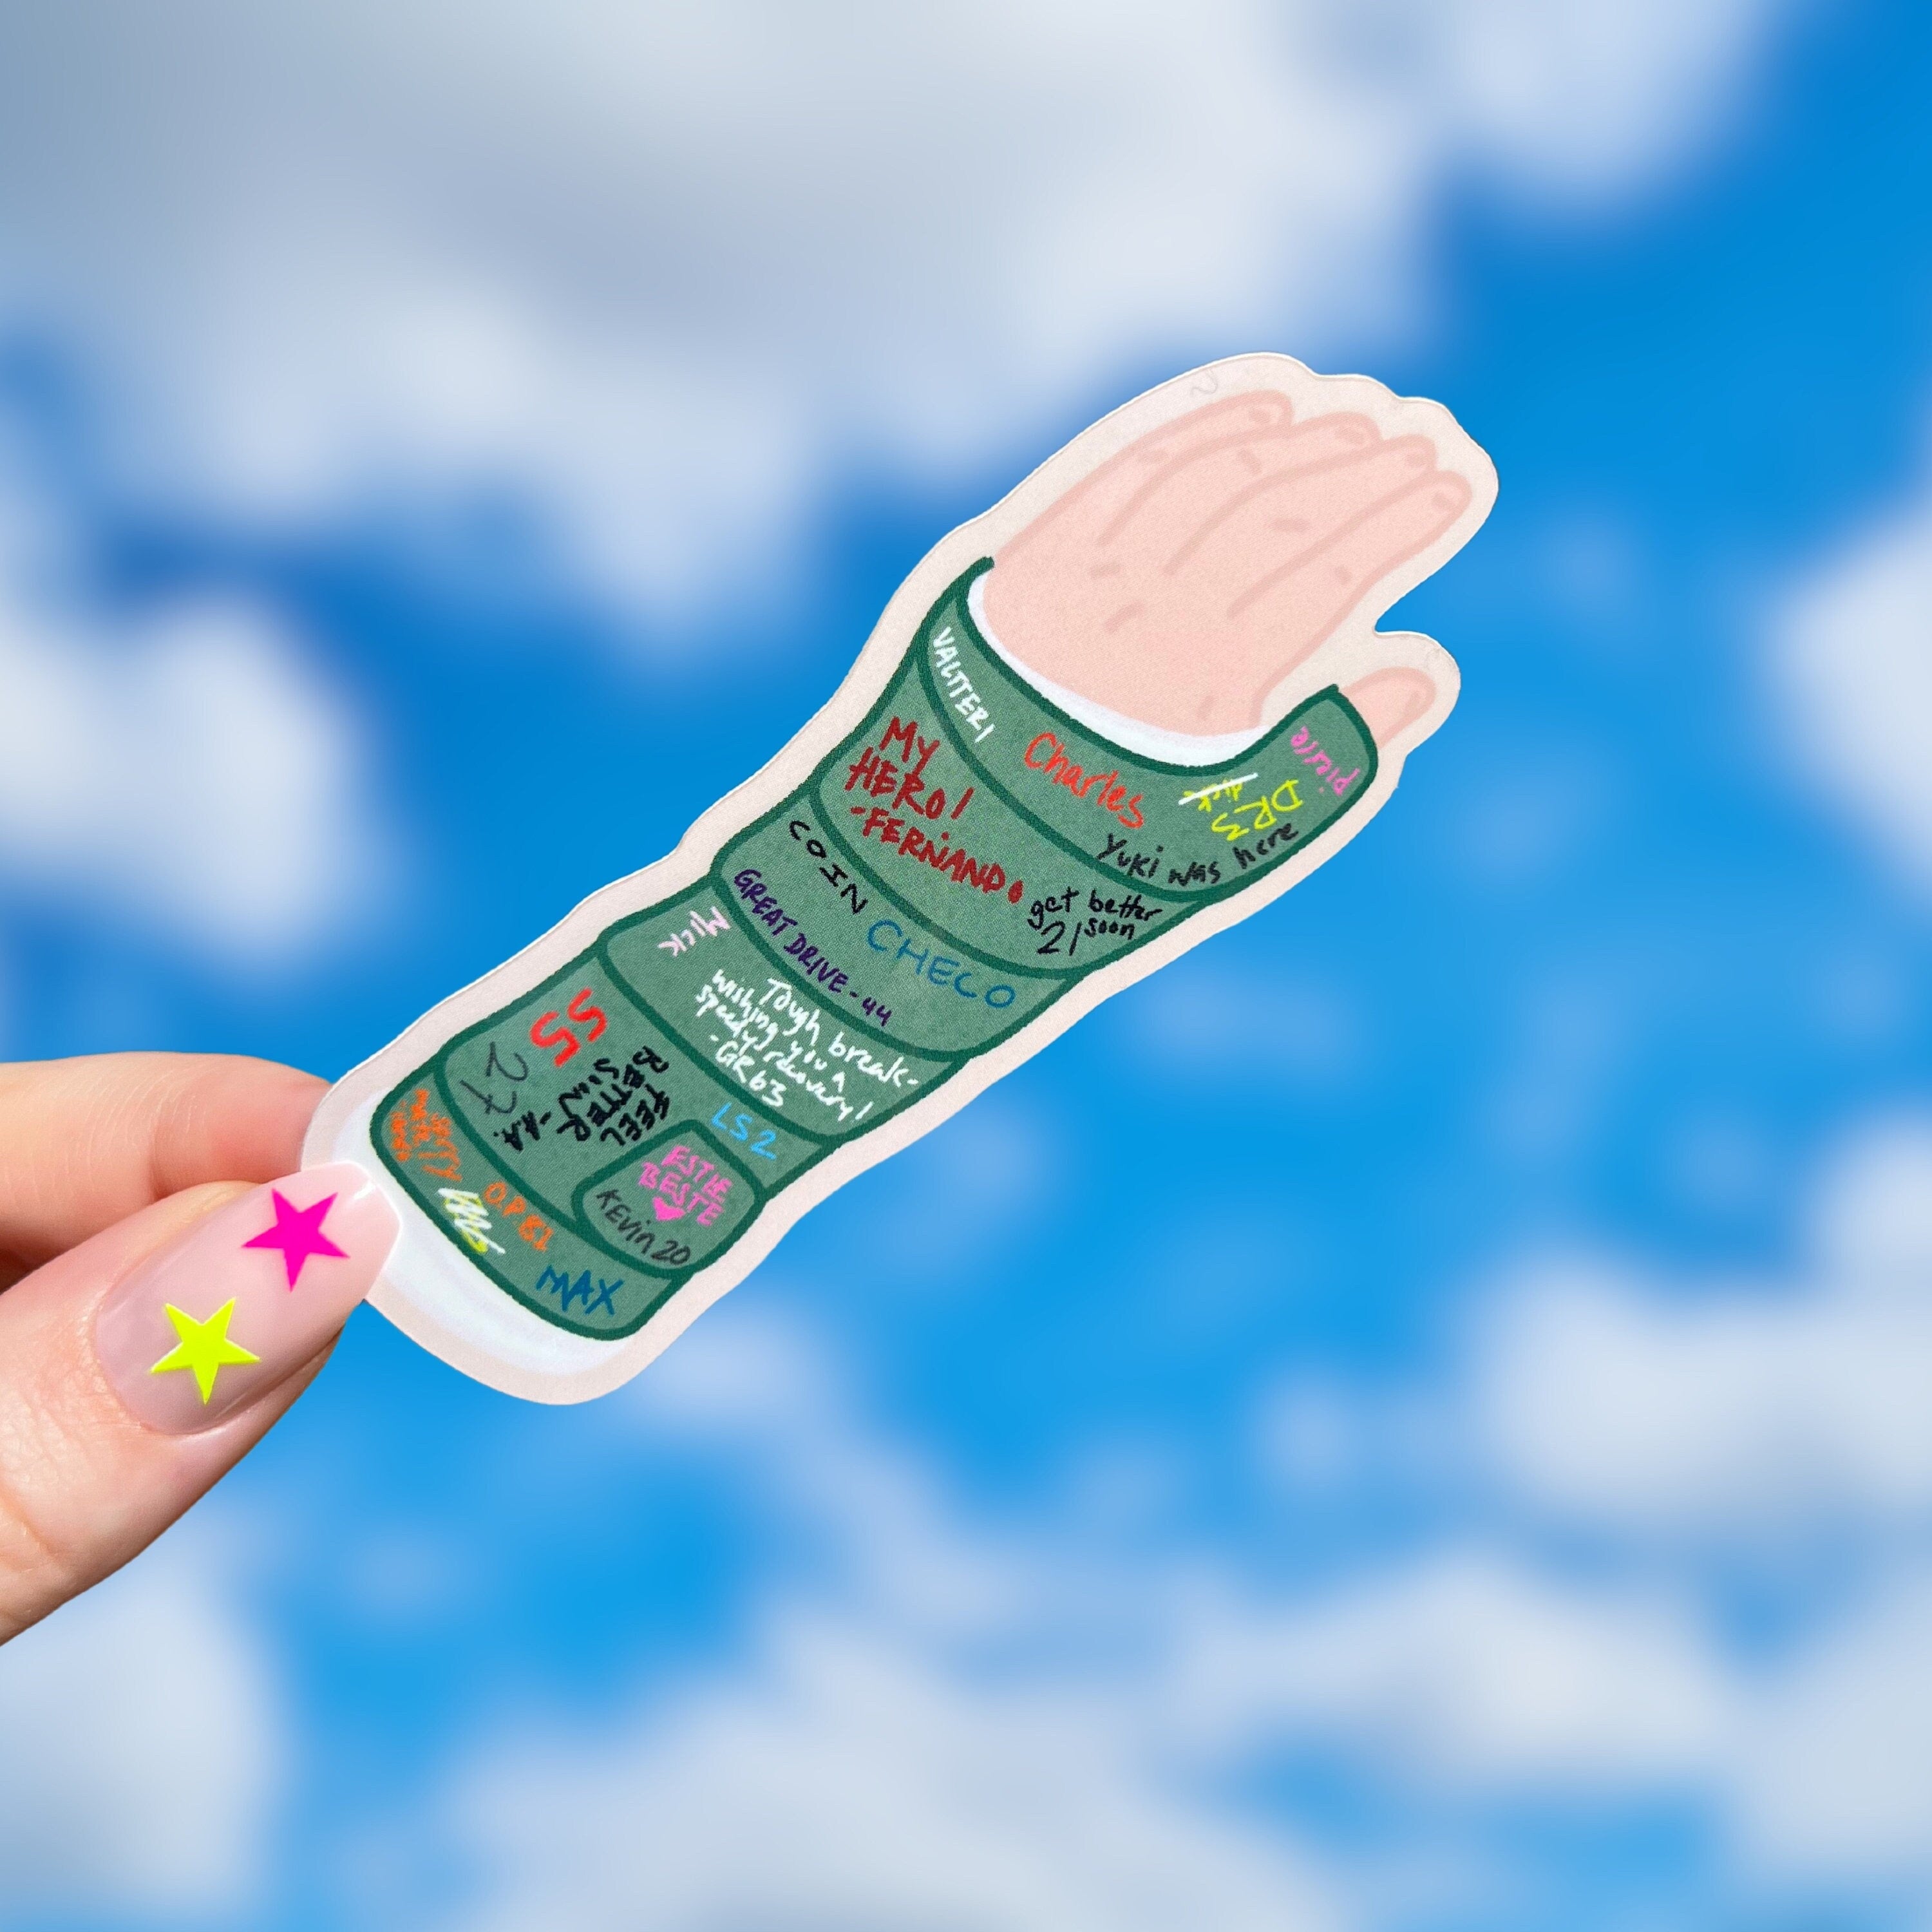 Lance Stroll wrist cast sticker